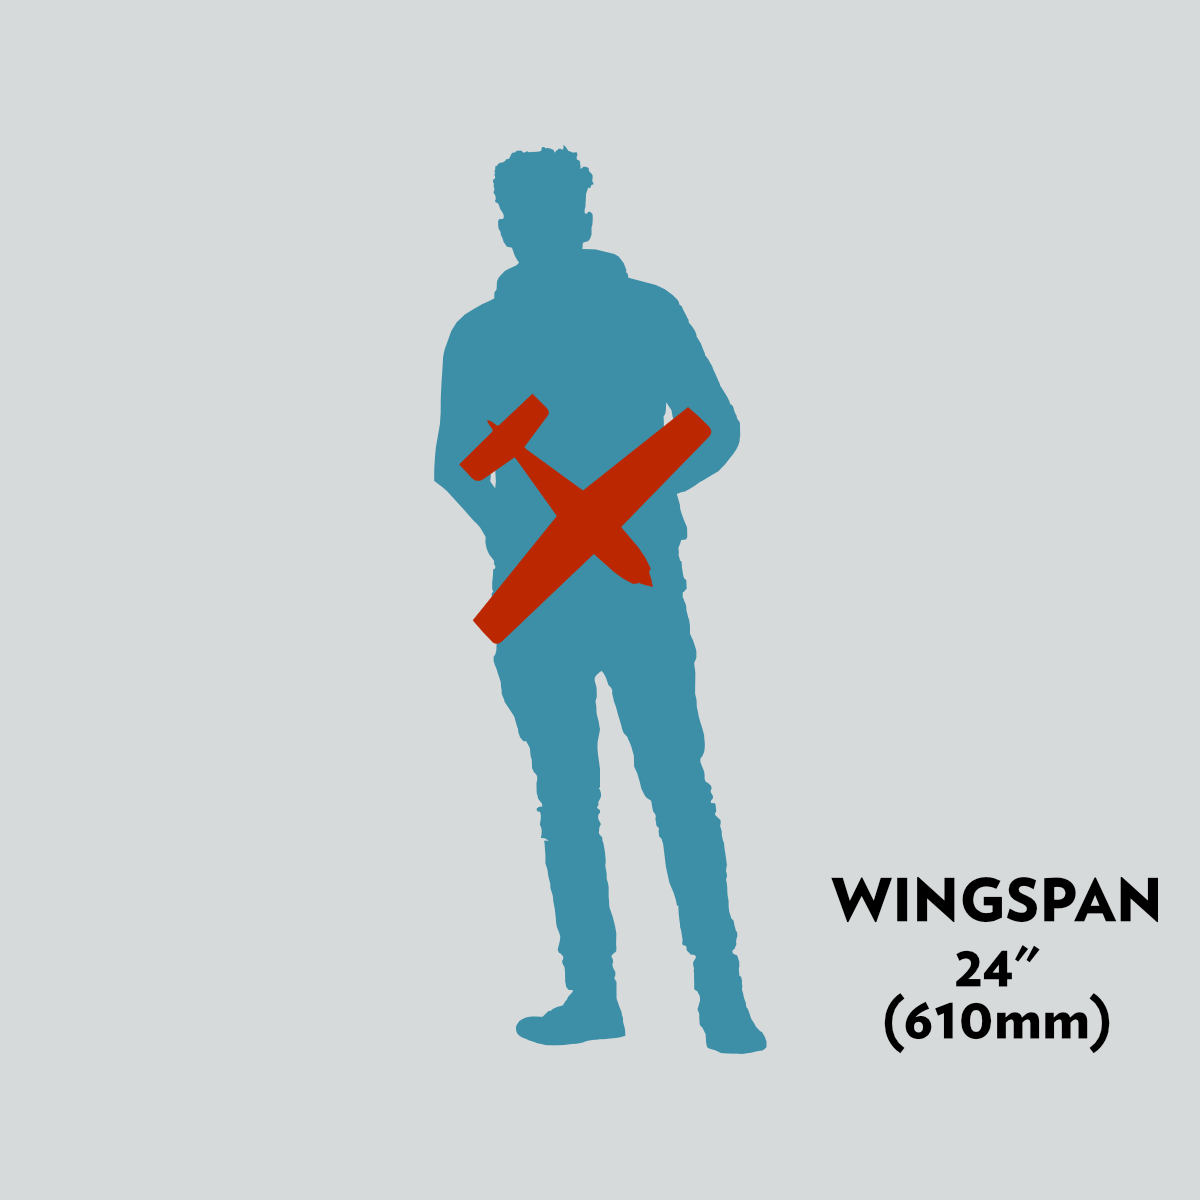 24" (609mm) Wingspan